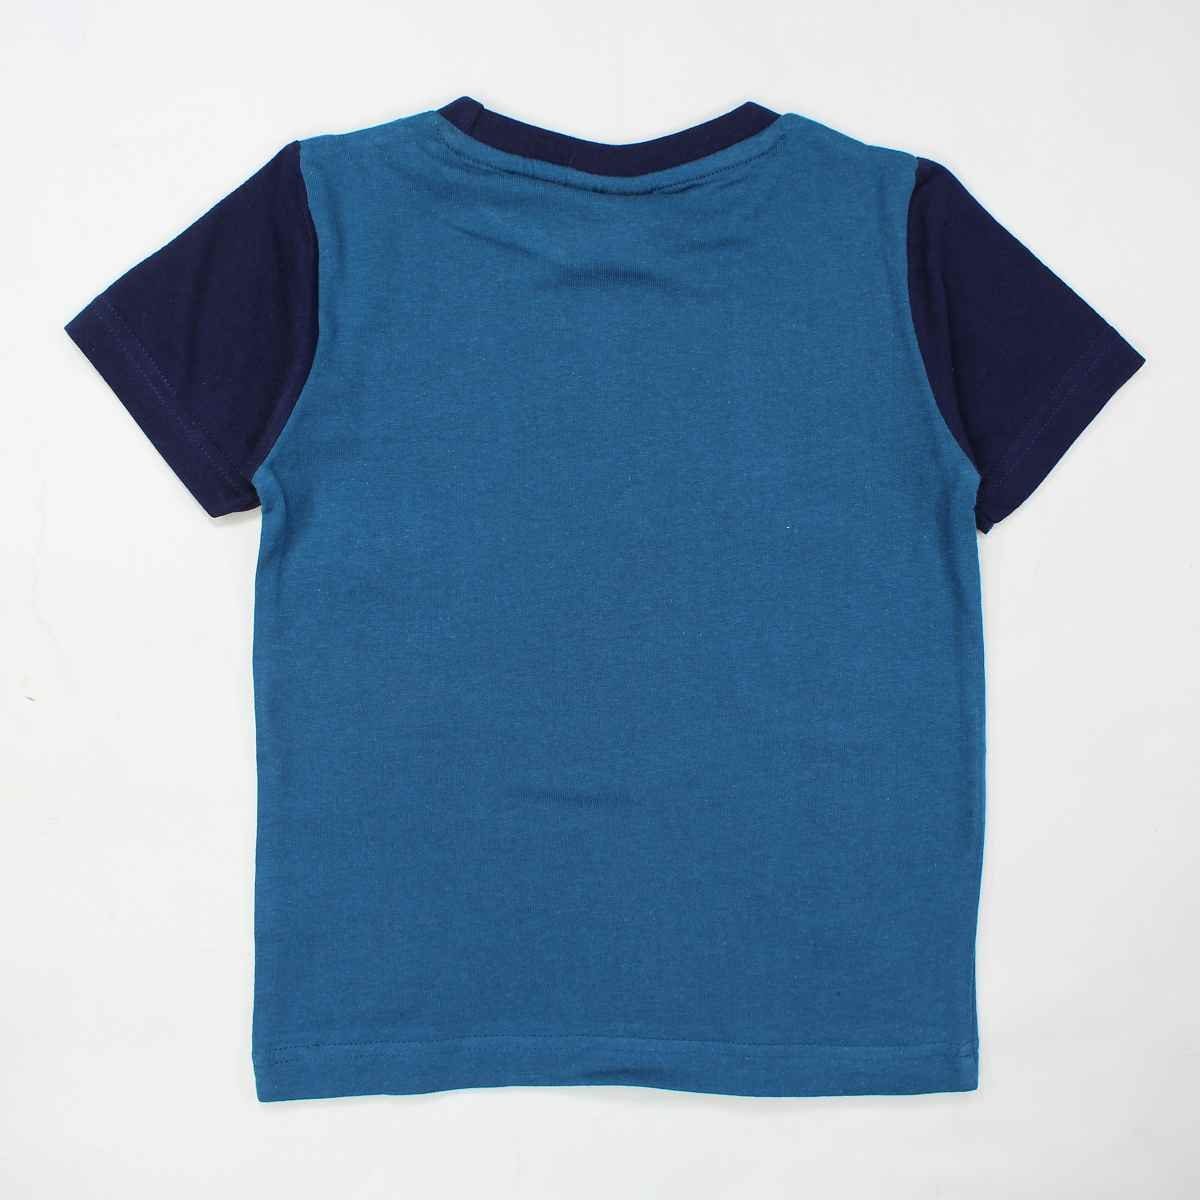 Kinder Shippuden Anime Blau Shirt bis Print-Shirt T-Shirt 104 Naruto Gr. Naruto Jungen Kurzarm 140